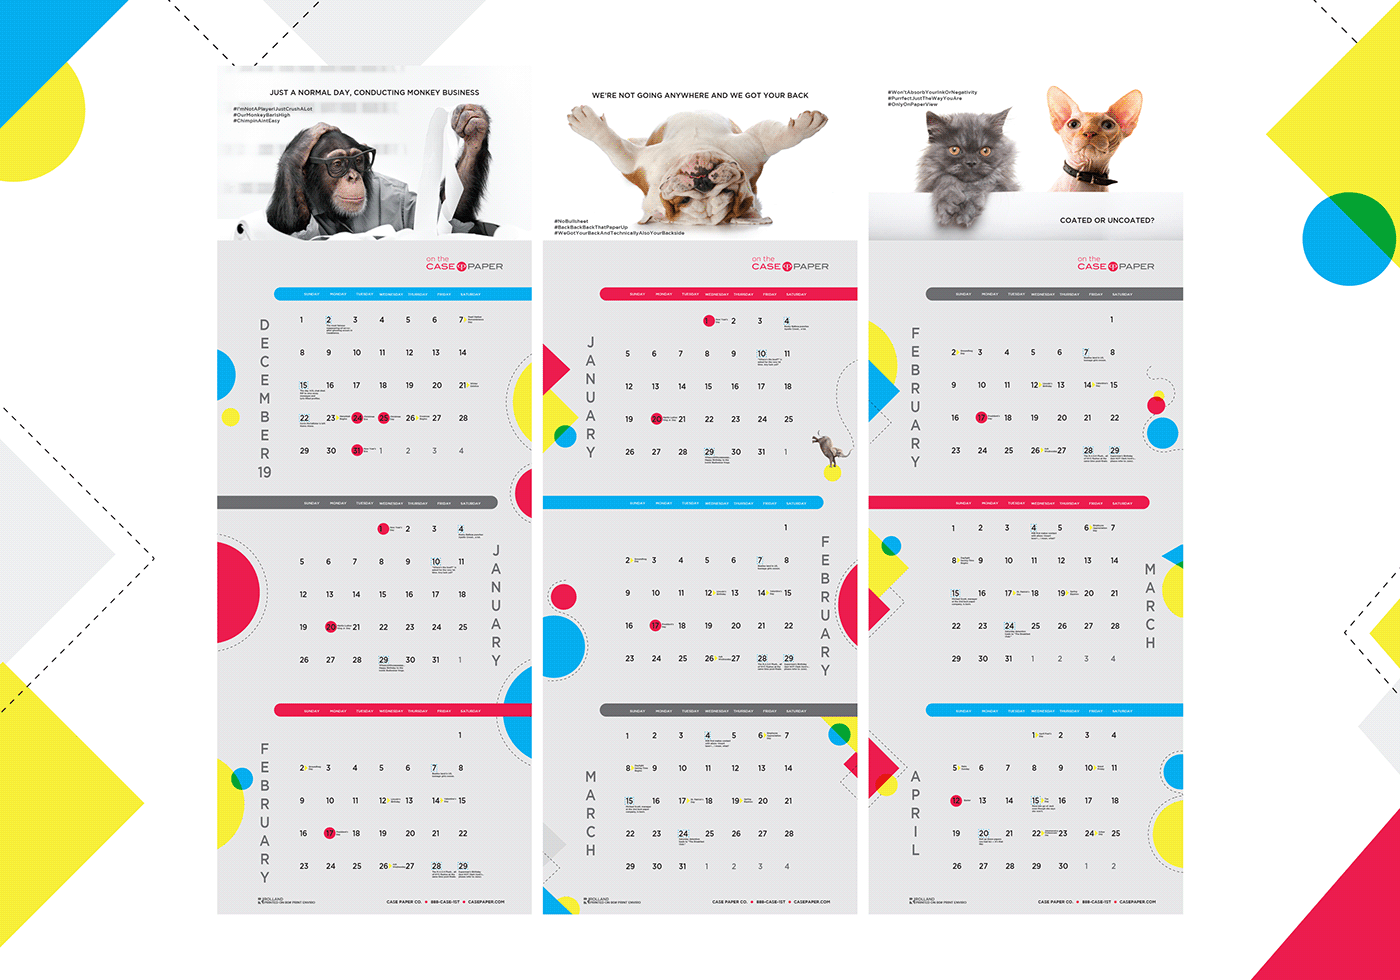 2020 calendar calendar cute animals Fun graphic icons witty